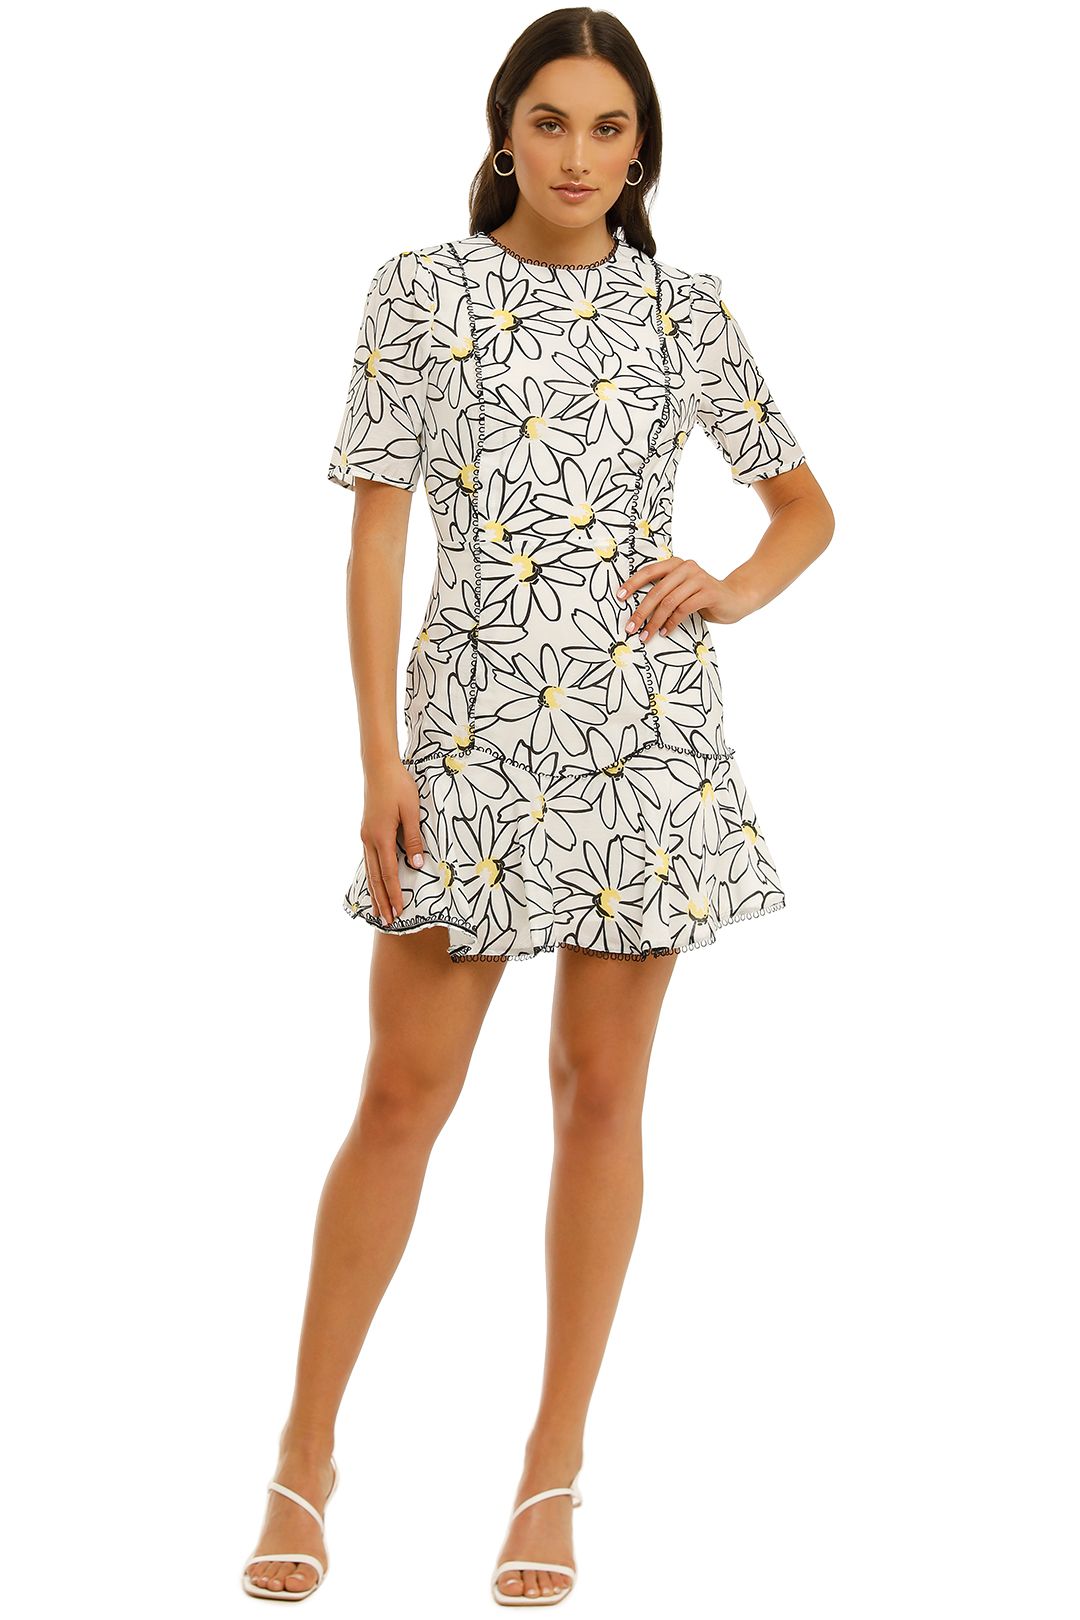 Topshop Petite bell sleeve mini dress in geo daisy print